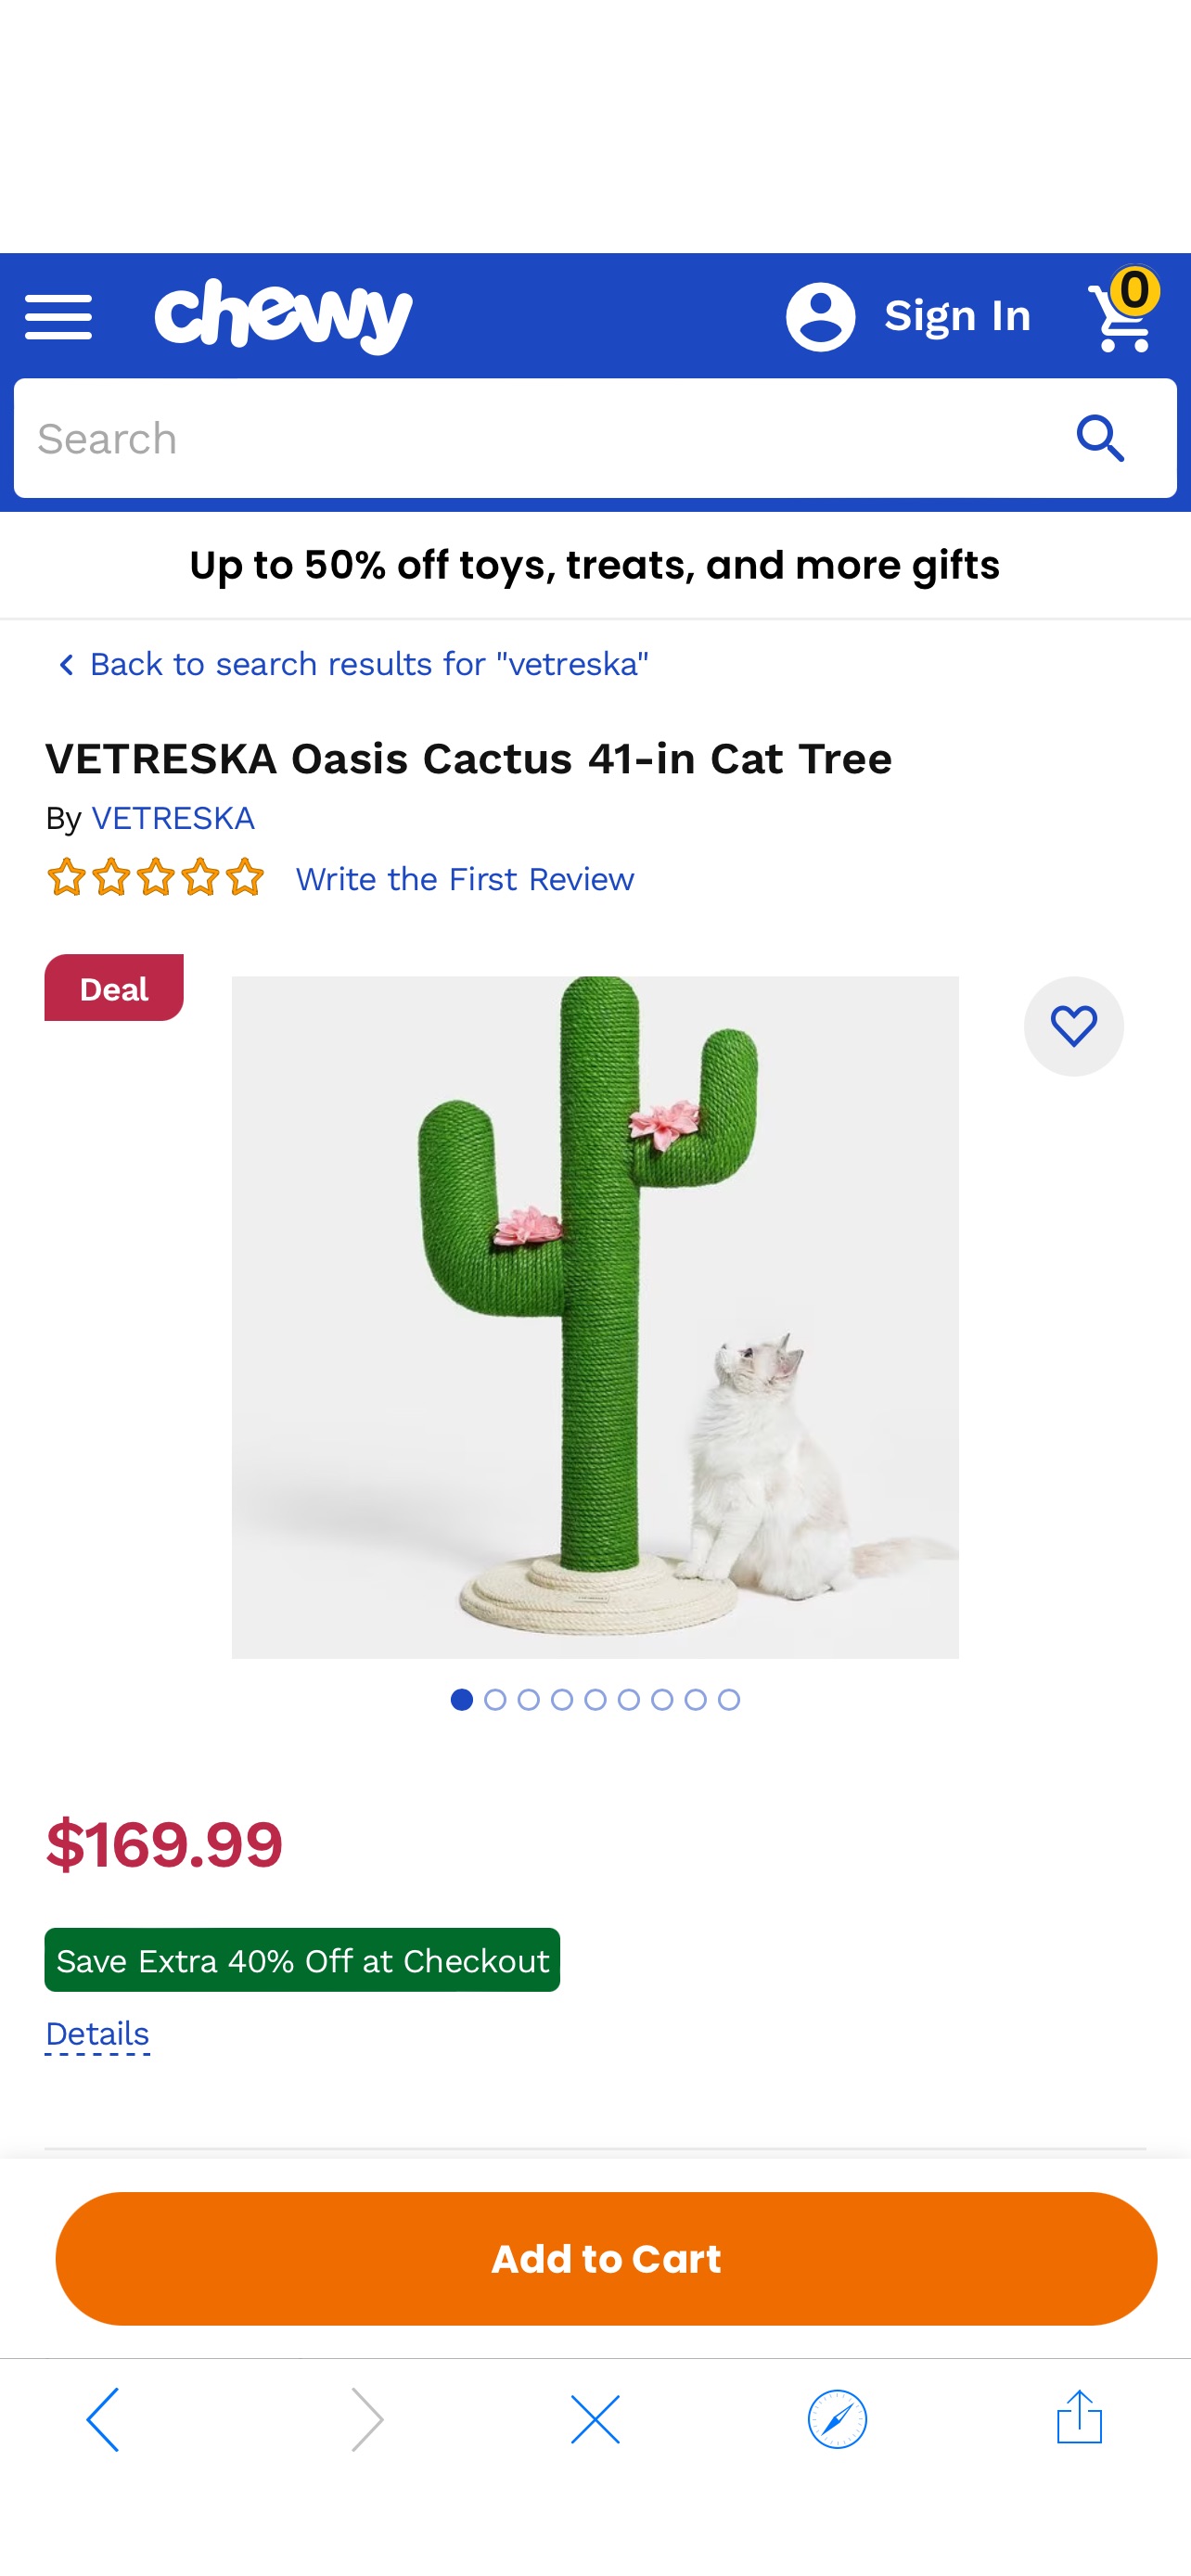 VETRESKA Oasis Cactus 41-in Cat Tree - Chewy.com